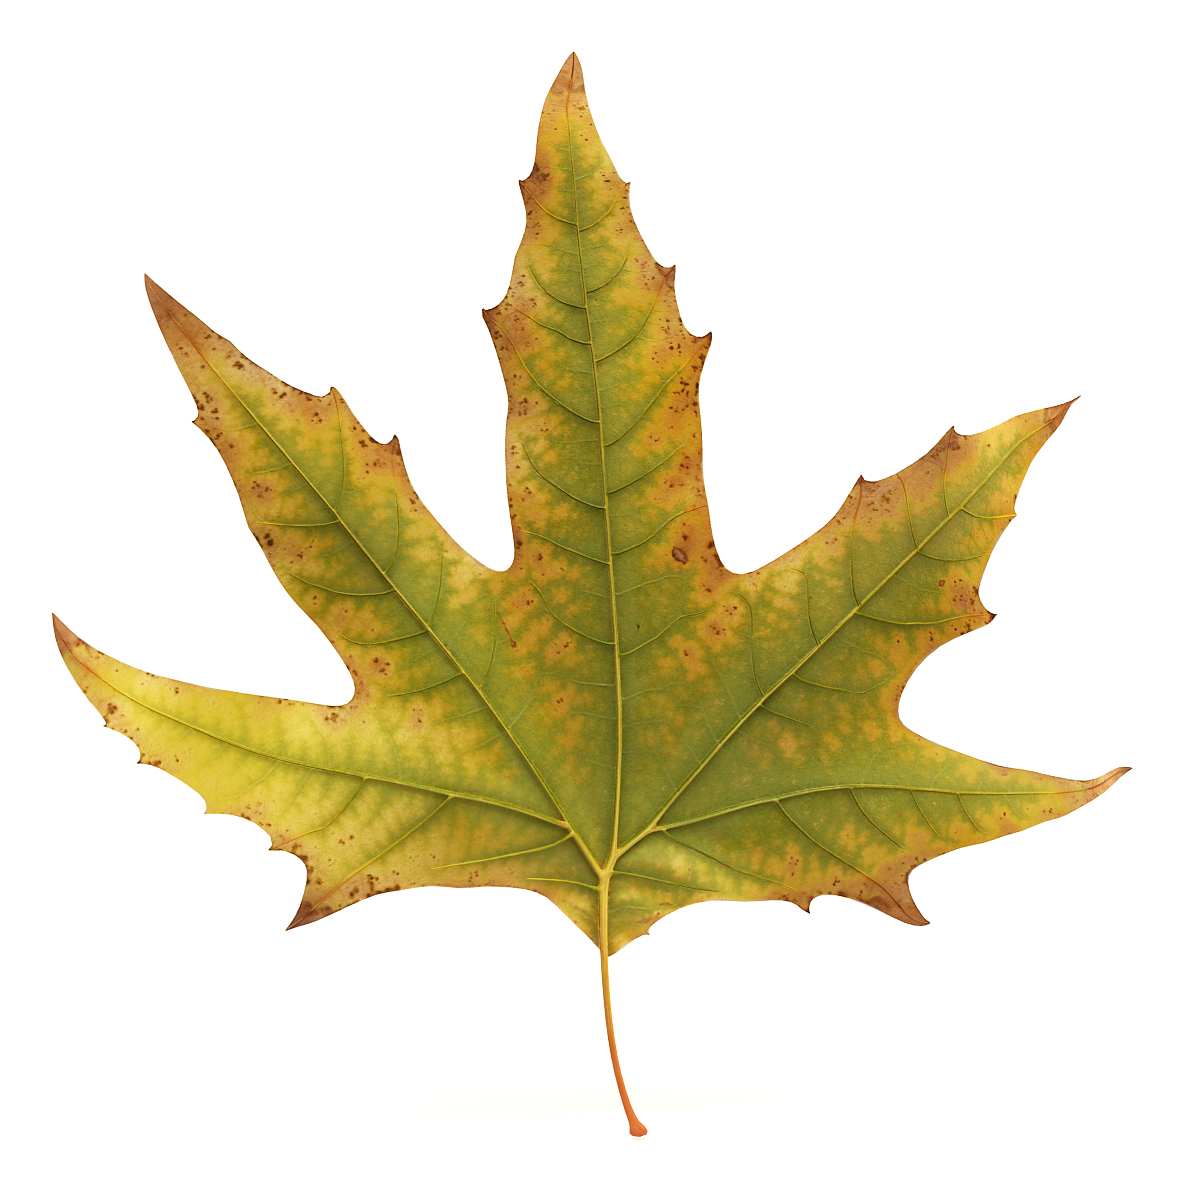 realistic autumn maple leaf 3d model